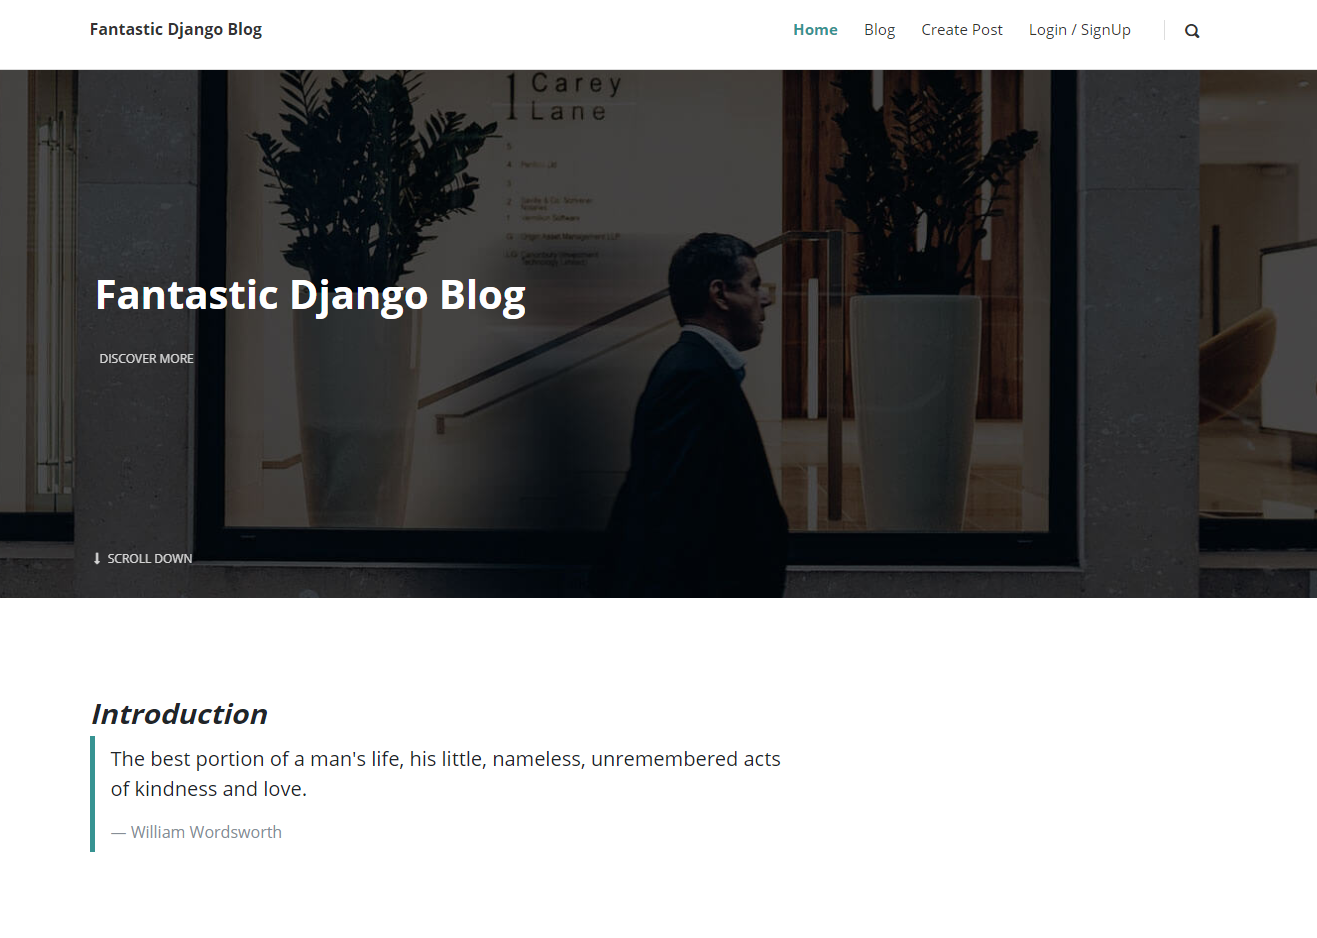 Fantastic Blog App made using Django Framework